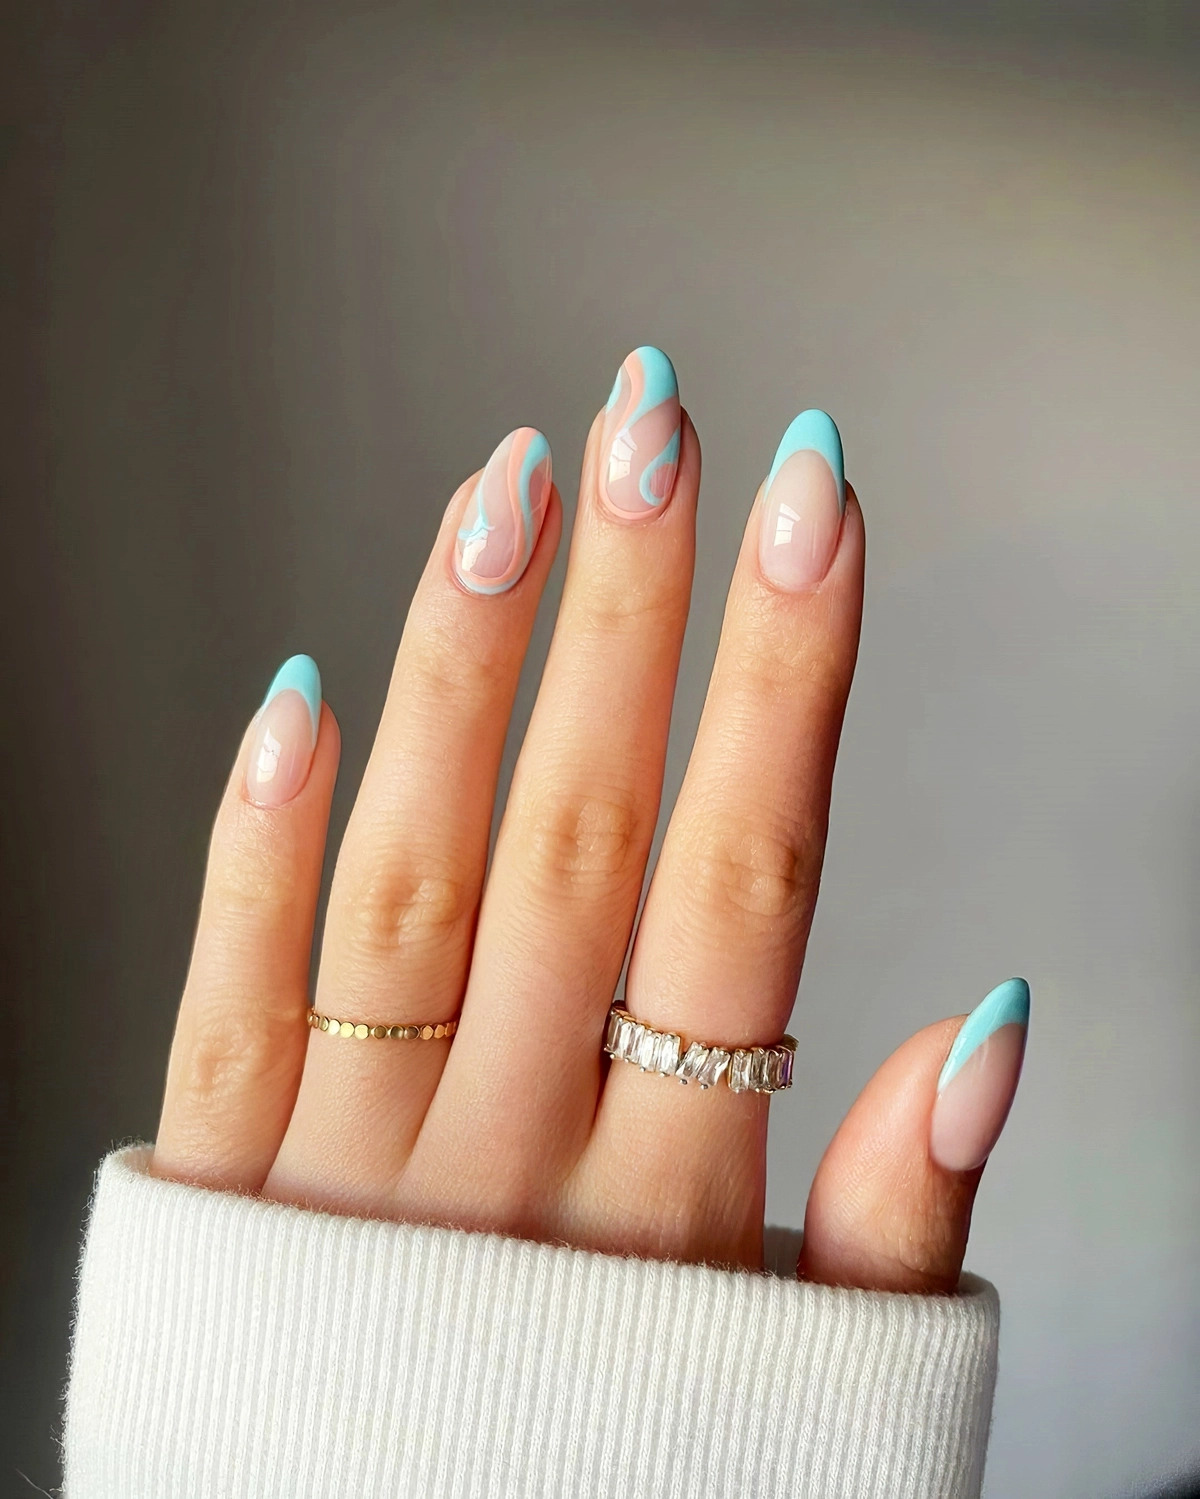 fingernaegel blau french nails ideen pastellnaegel heluviee